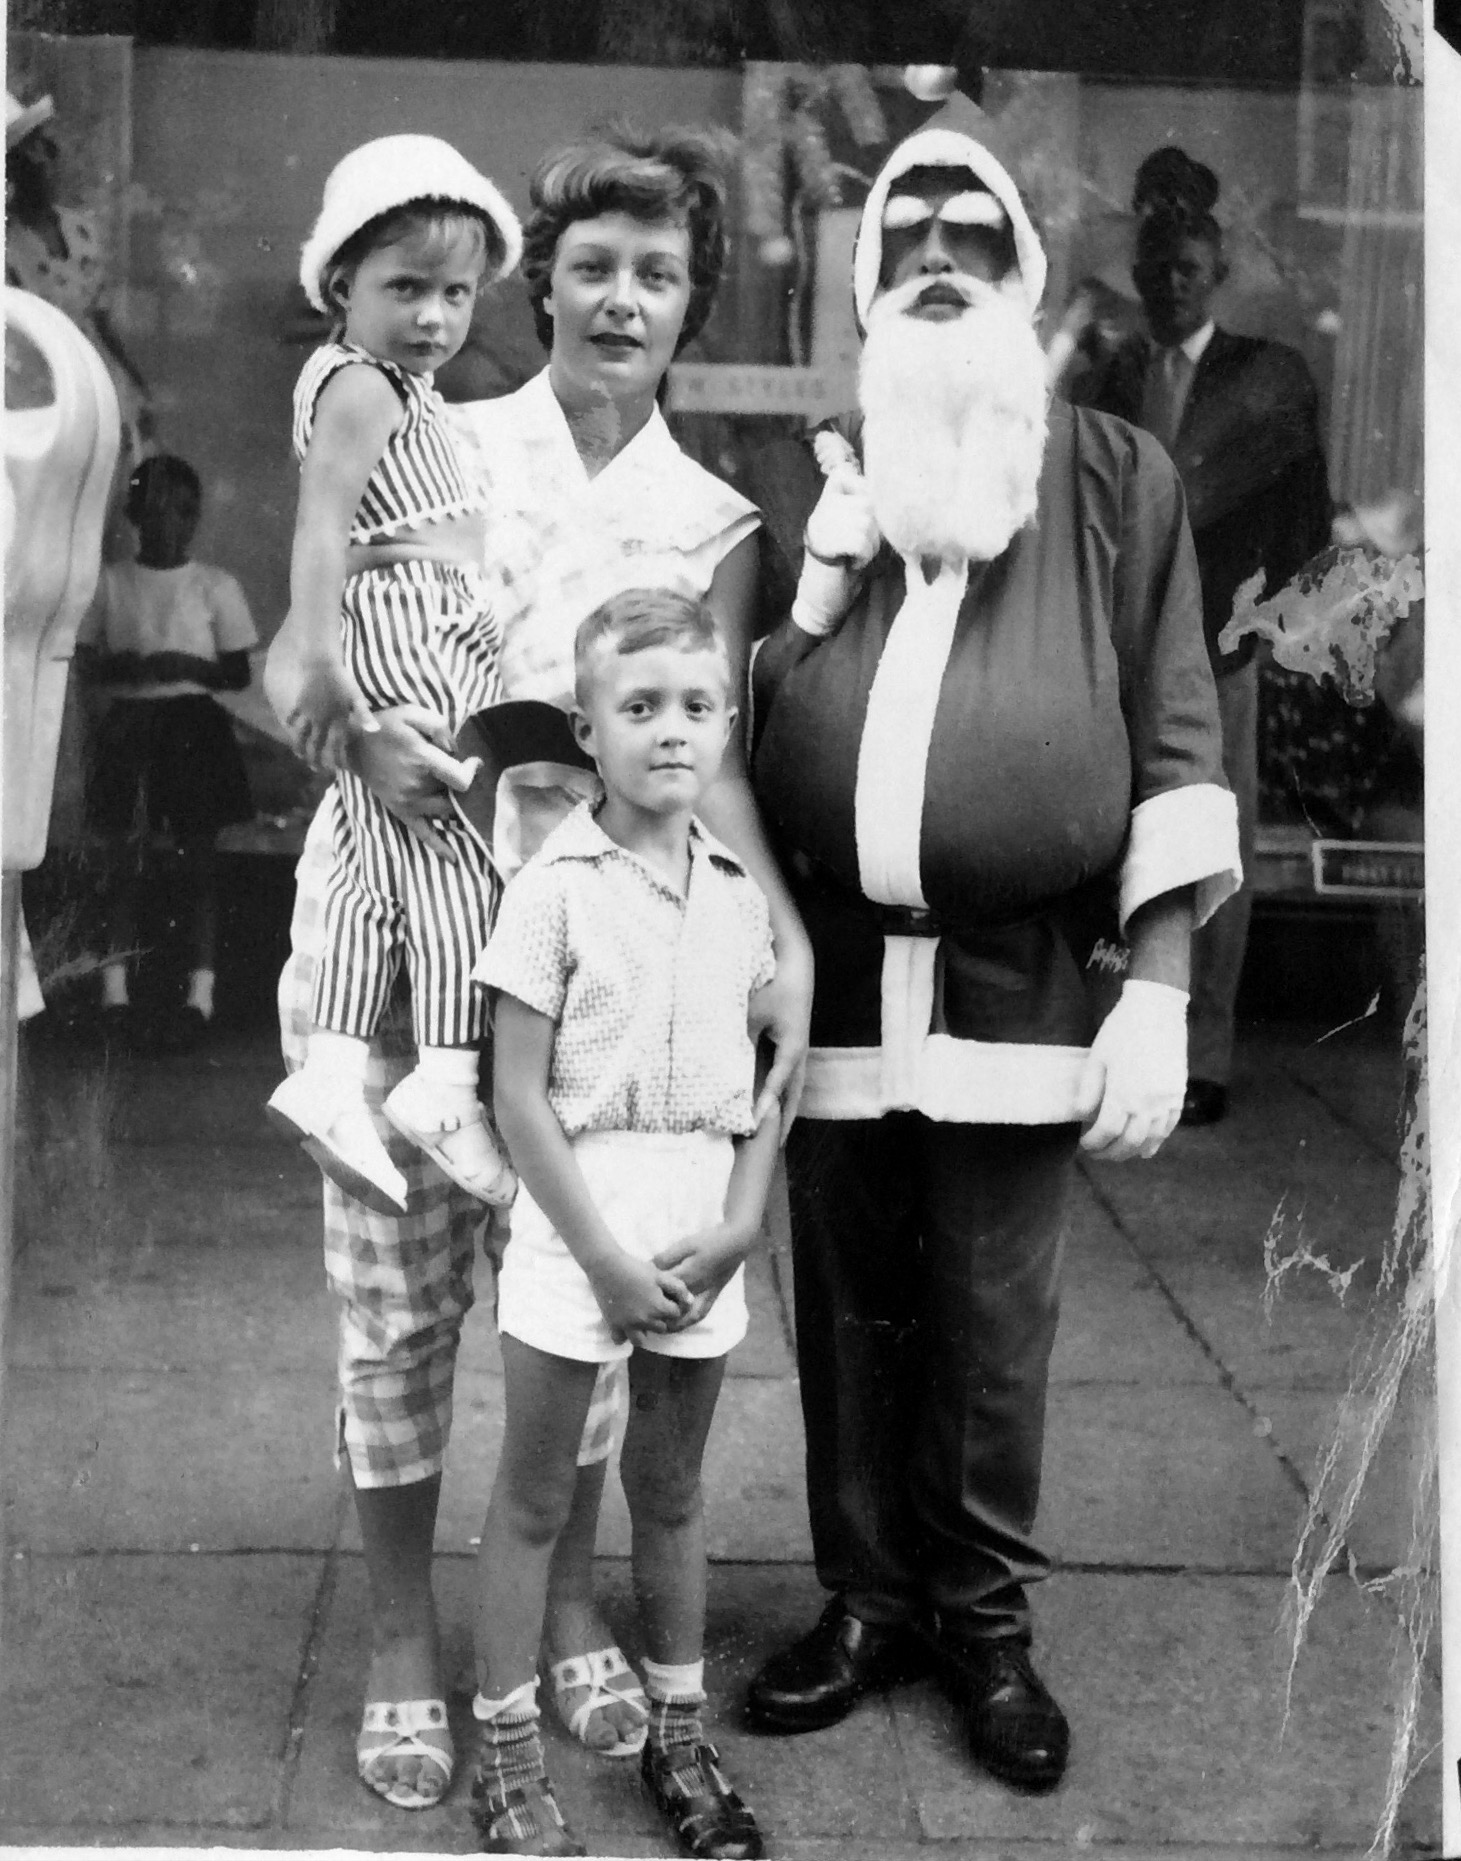 CHRISTMAS 1962 - OUTSIDE OK BAZAARS....